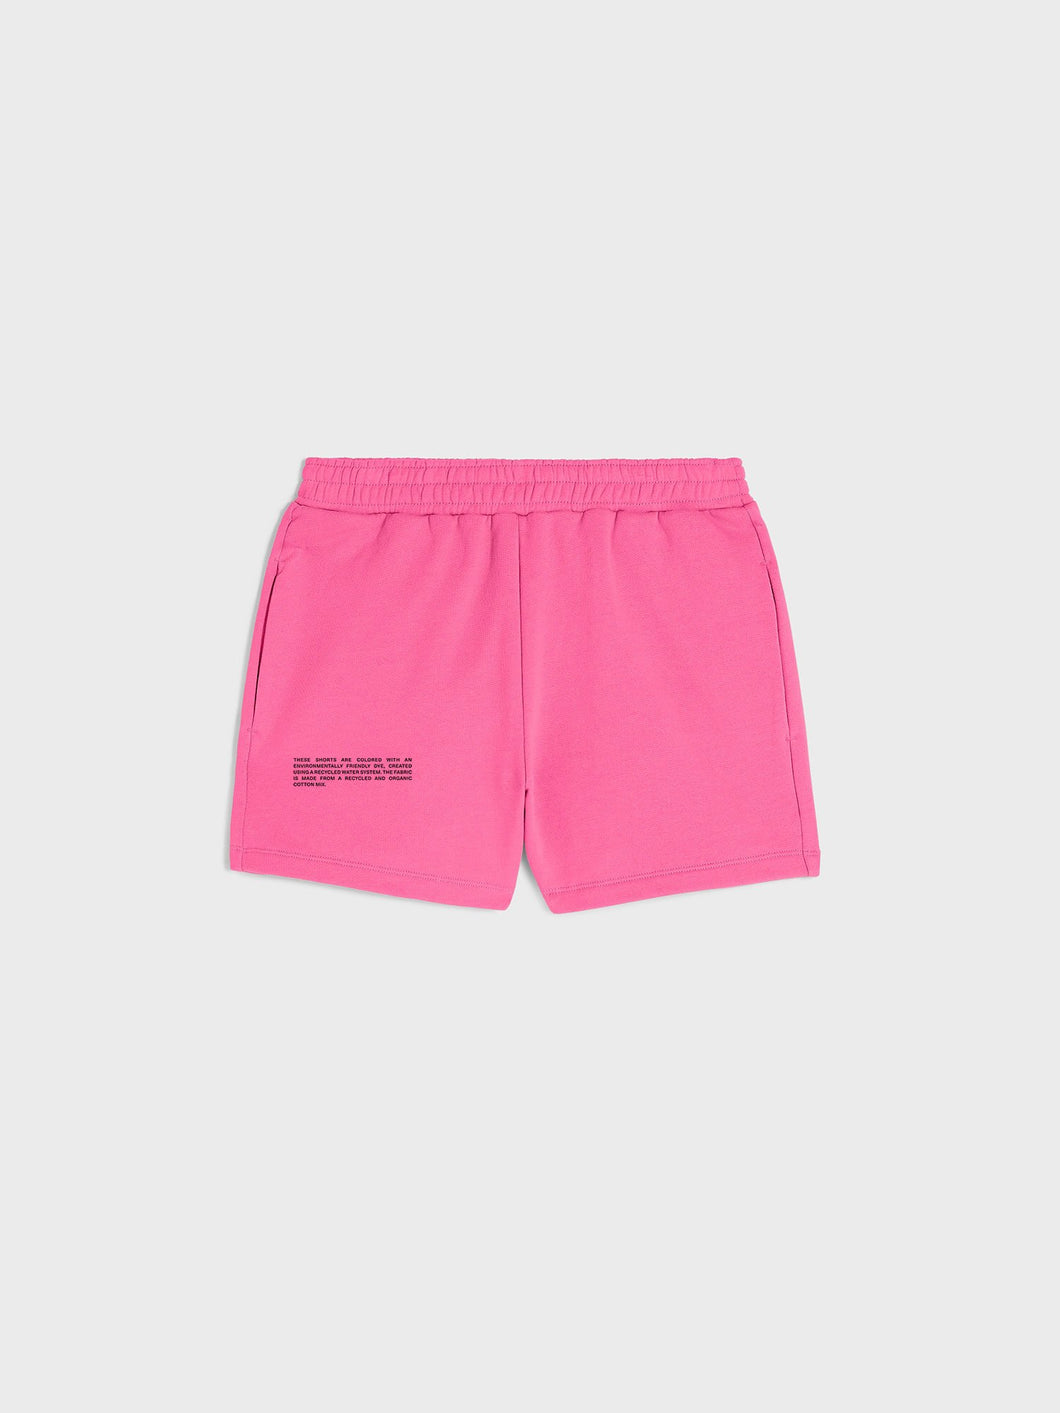 Flamingo-Rosa-Shorts.